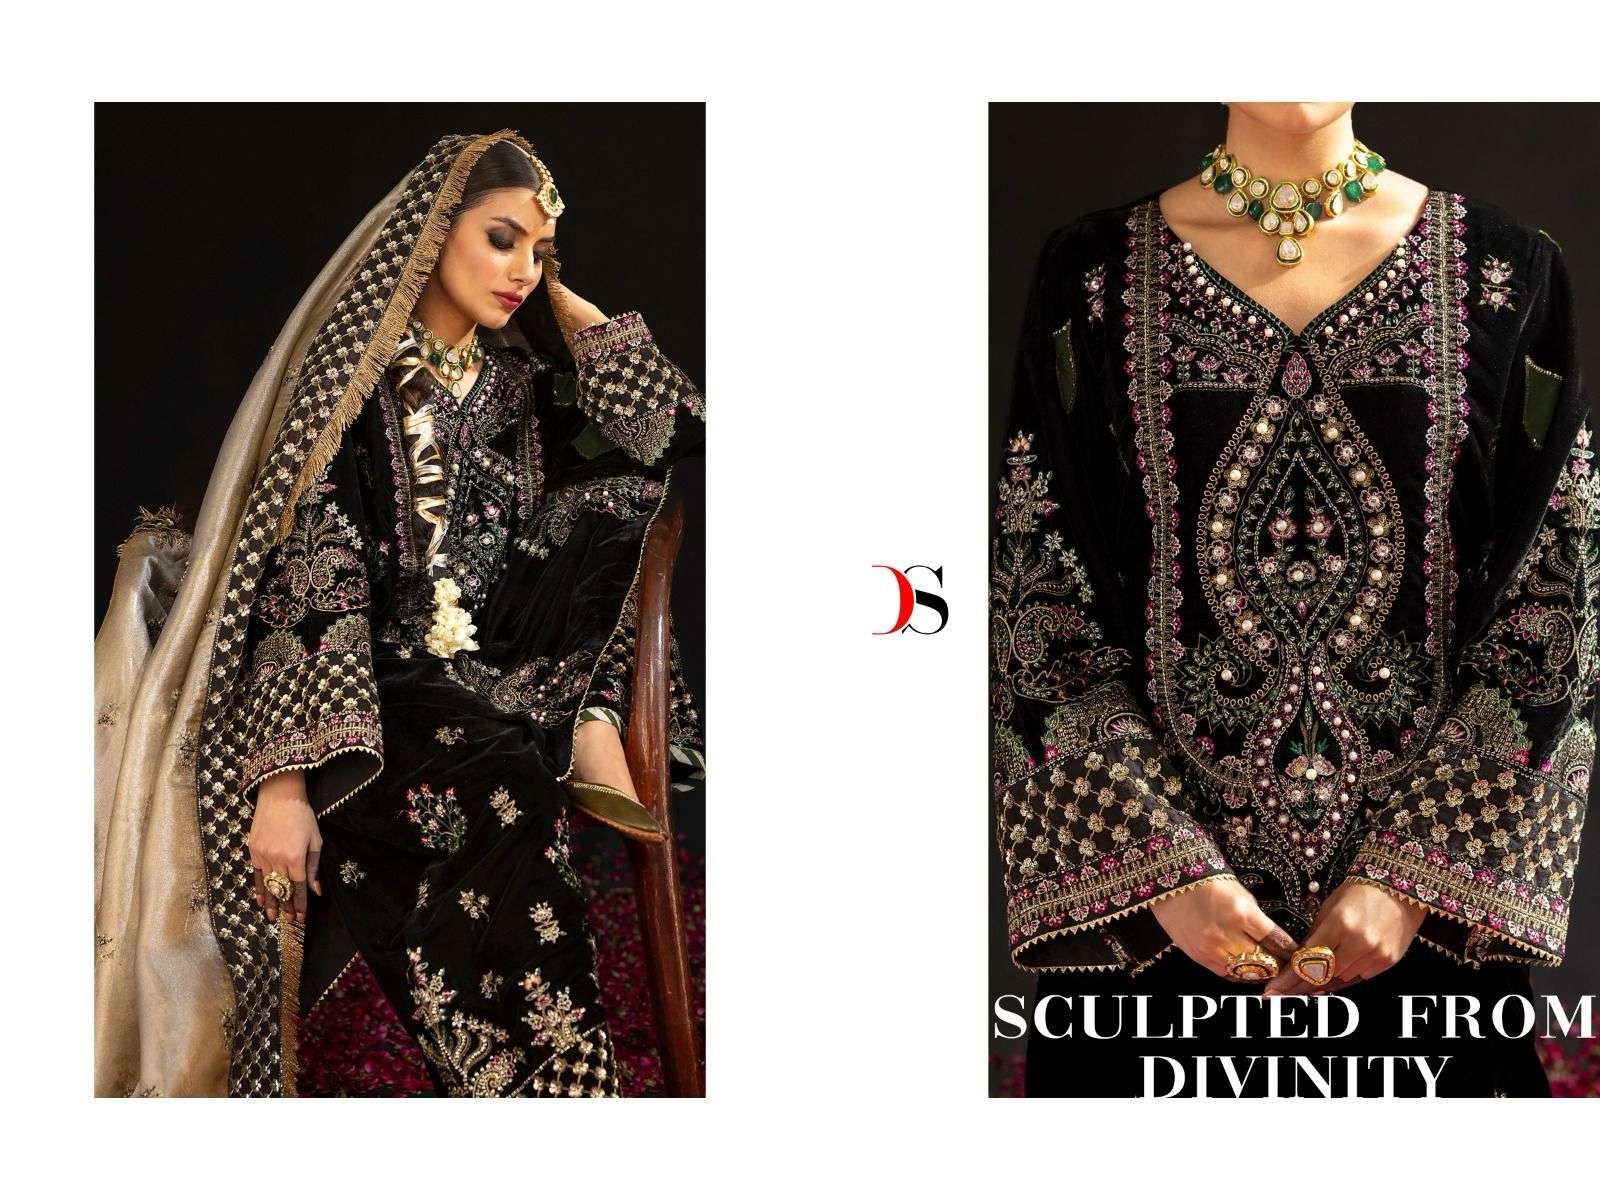 deepsy suits maria b festive season 3281-3284 series latest designer partywear salwar kameez wholesaler surat gujarat